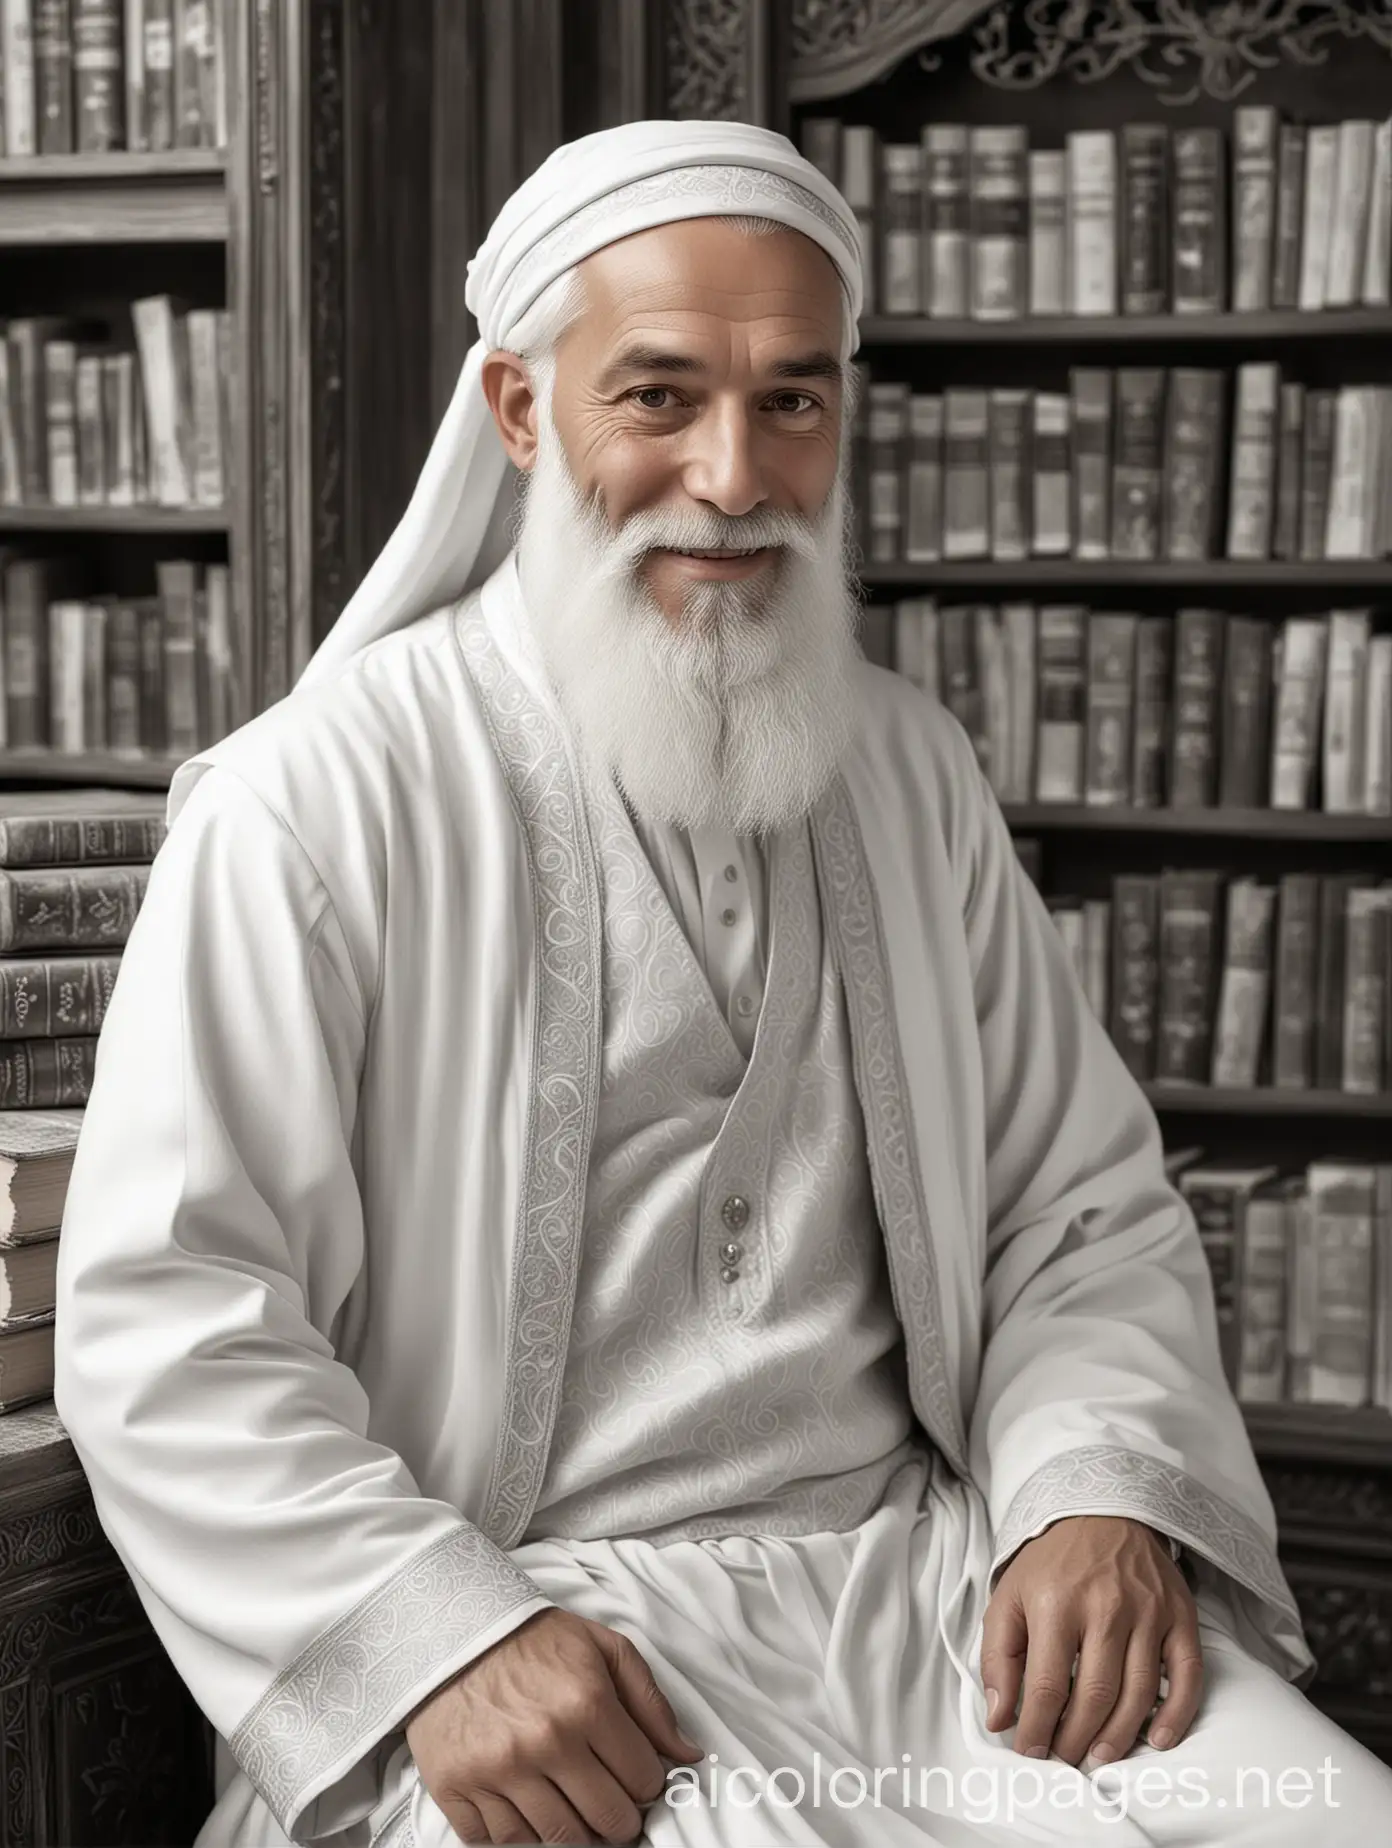 Islamic-Era-Scholar-Portrait-in-Vintage-Library-Setting-Wise-Man-Smiling-in-White-Attire